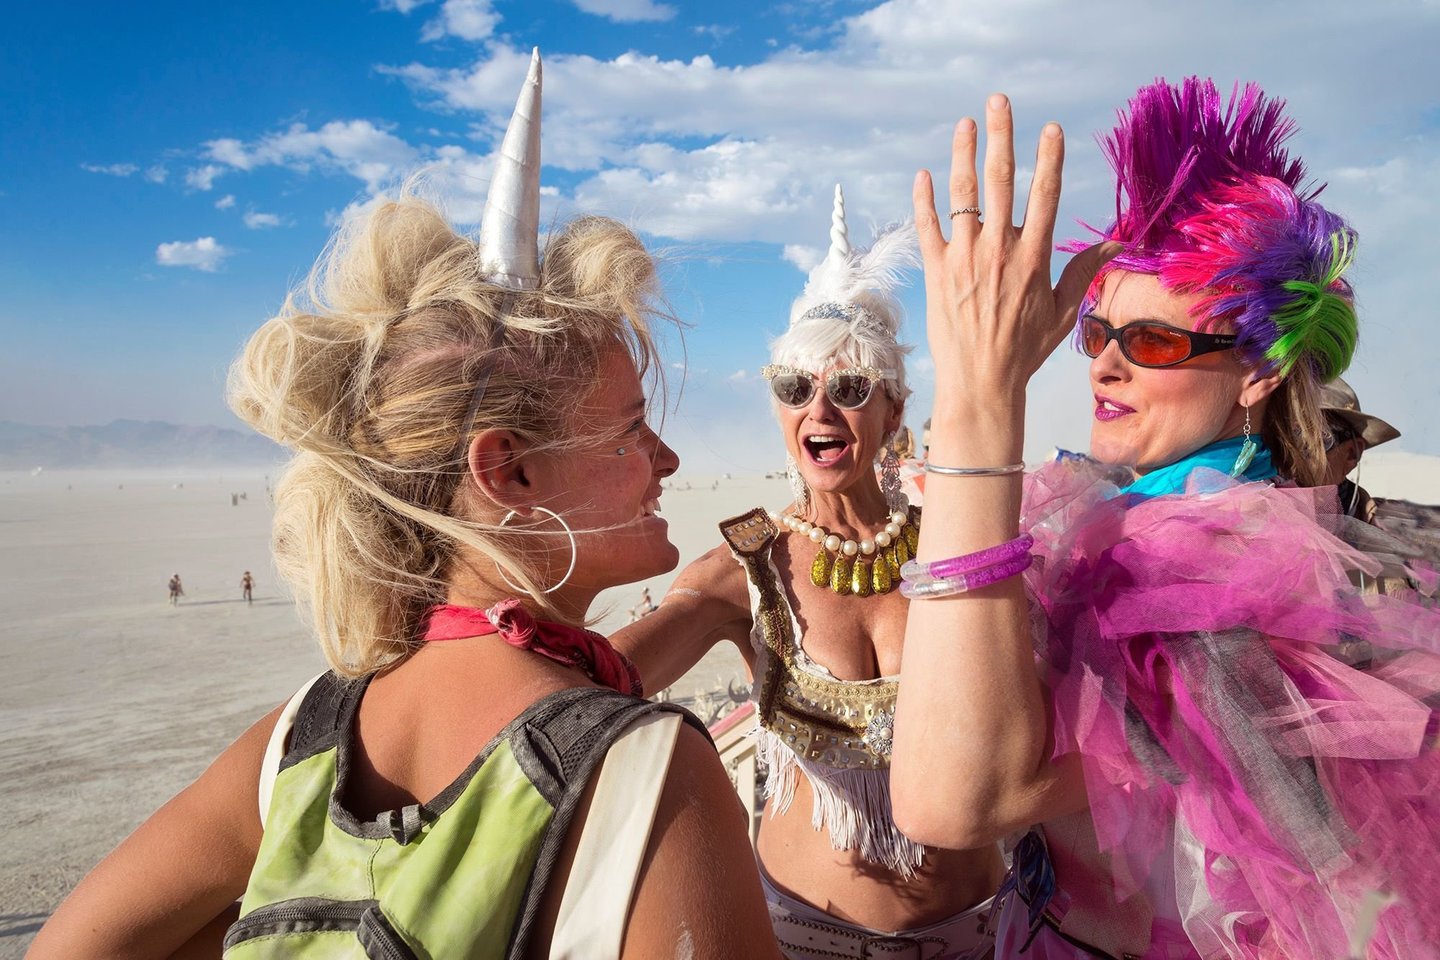 Romualdo Požerskio įamžinta garsiojo festivalio „Burning Man“ akimirka<br>R.Požerskio nuotr.